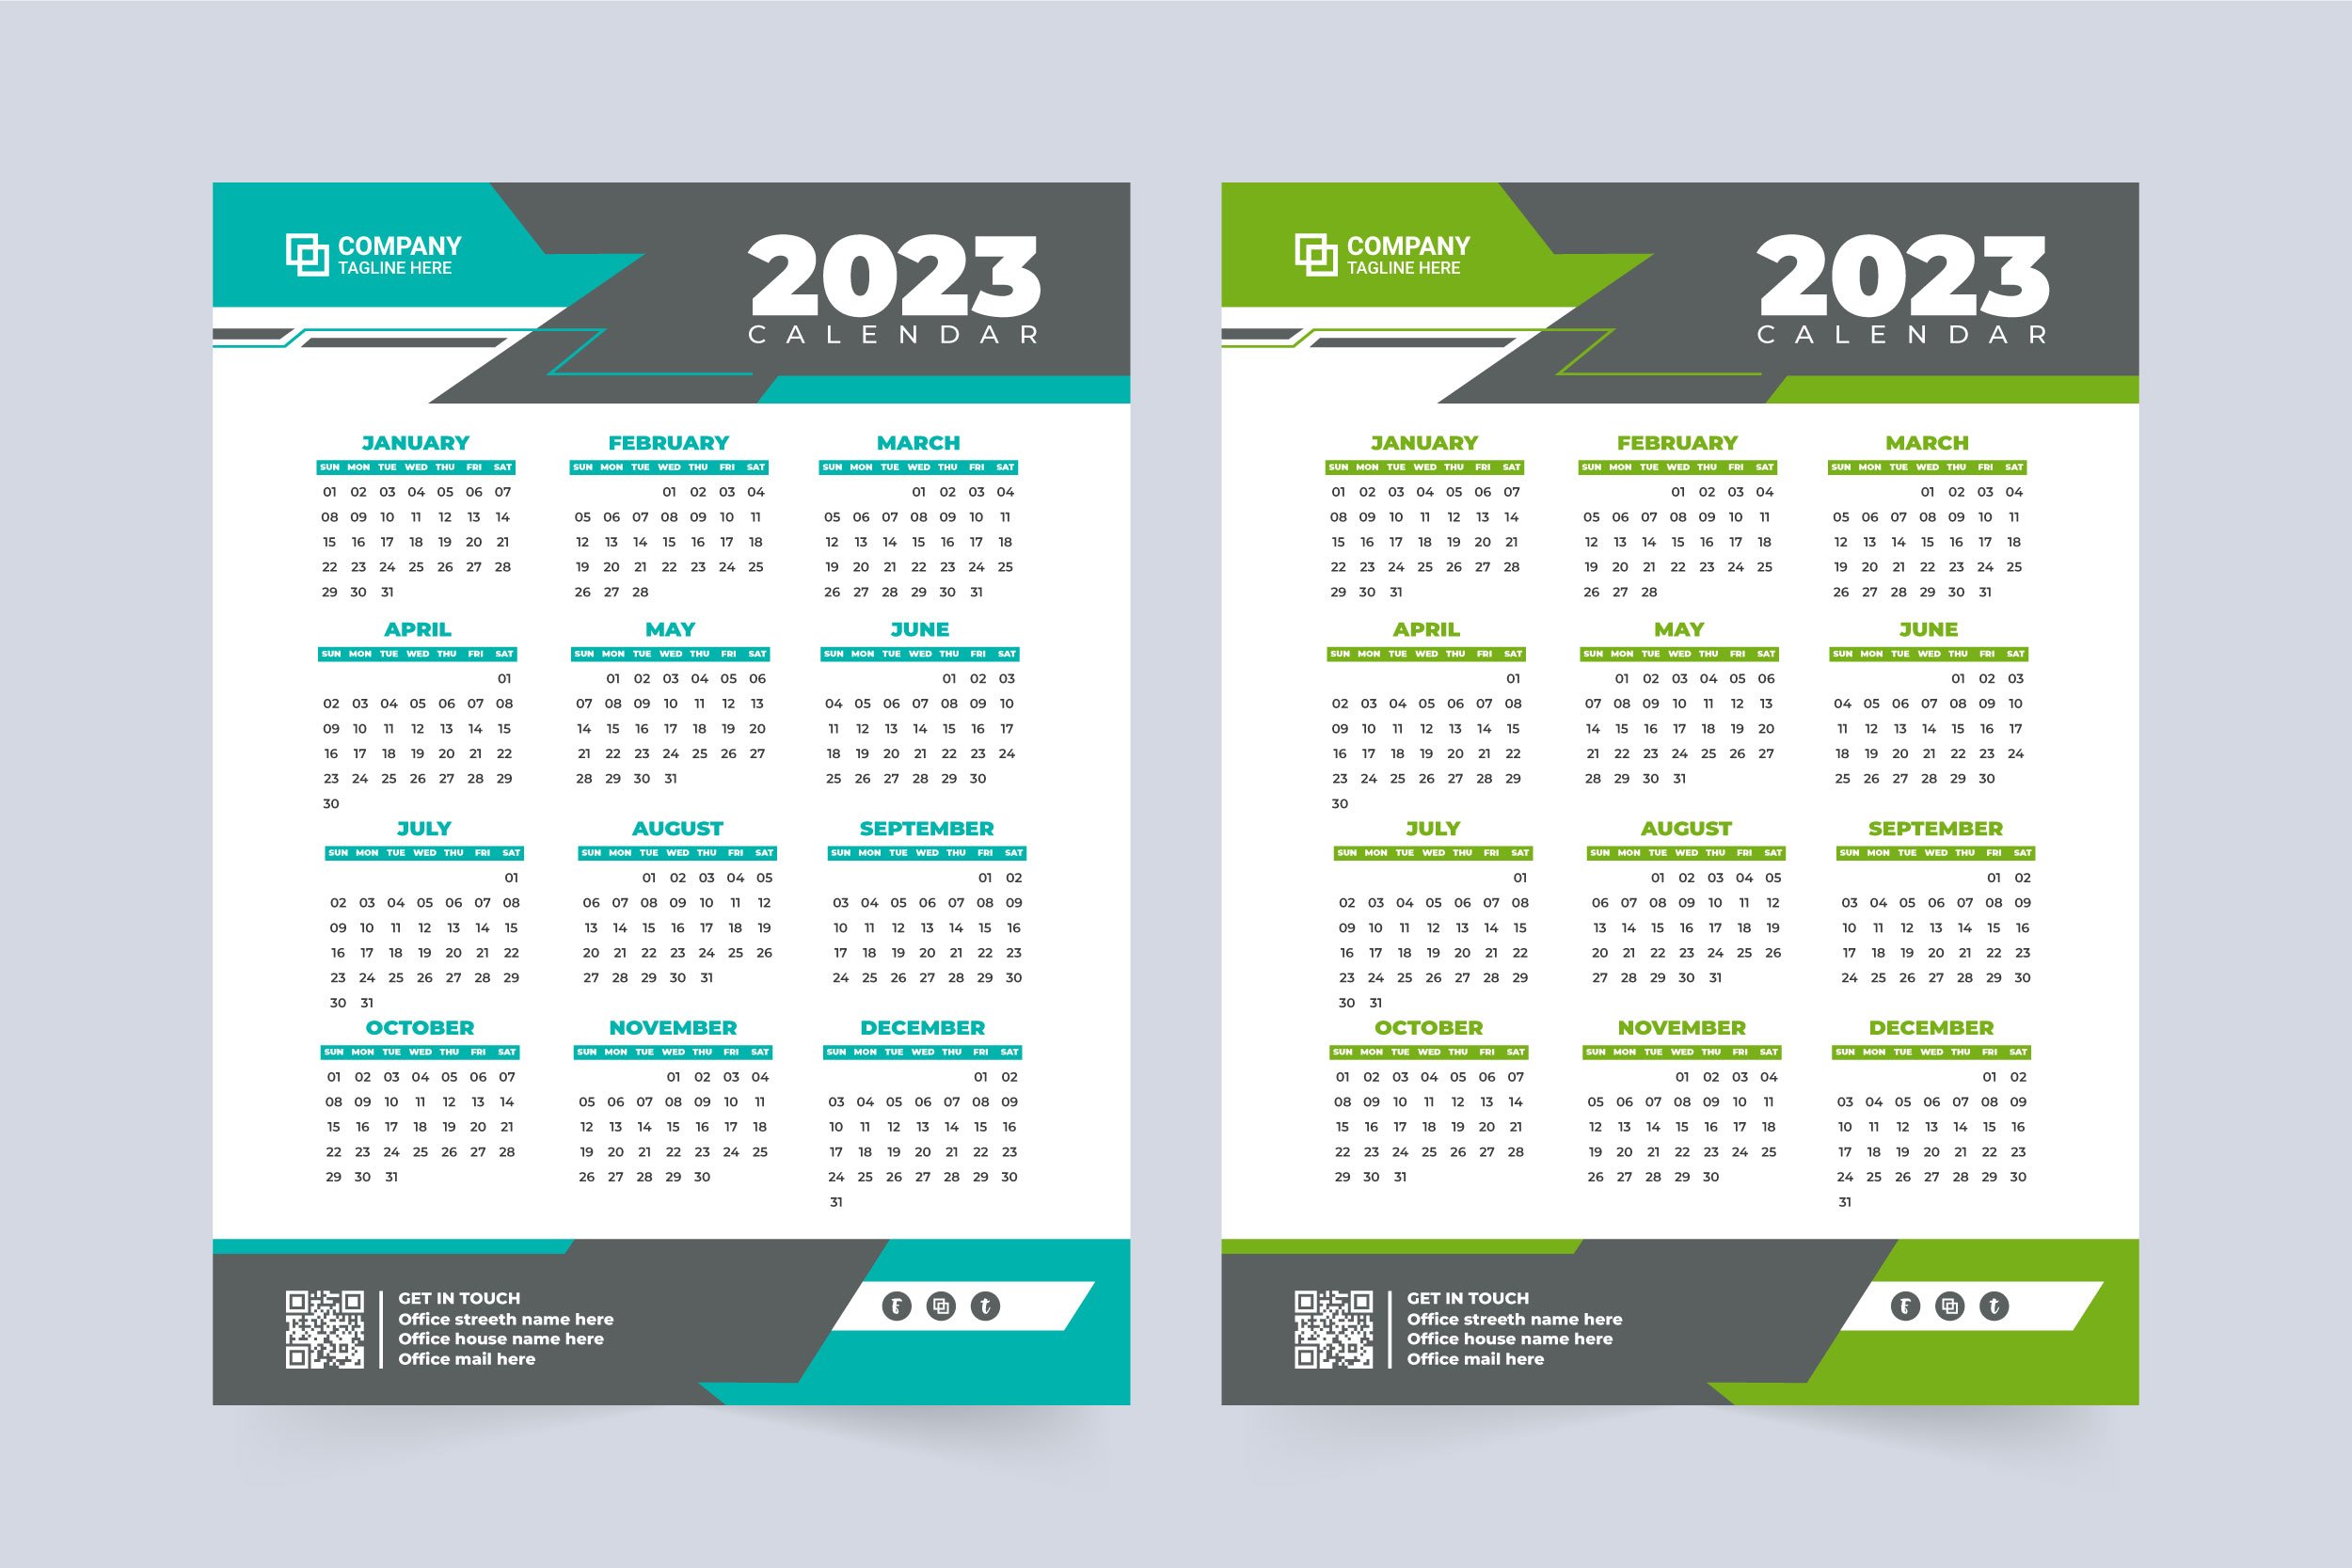 2023 year Annual calendar template by Iftikhar Alam on Dribbble